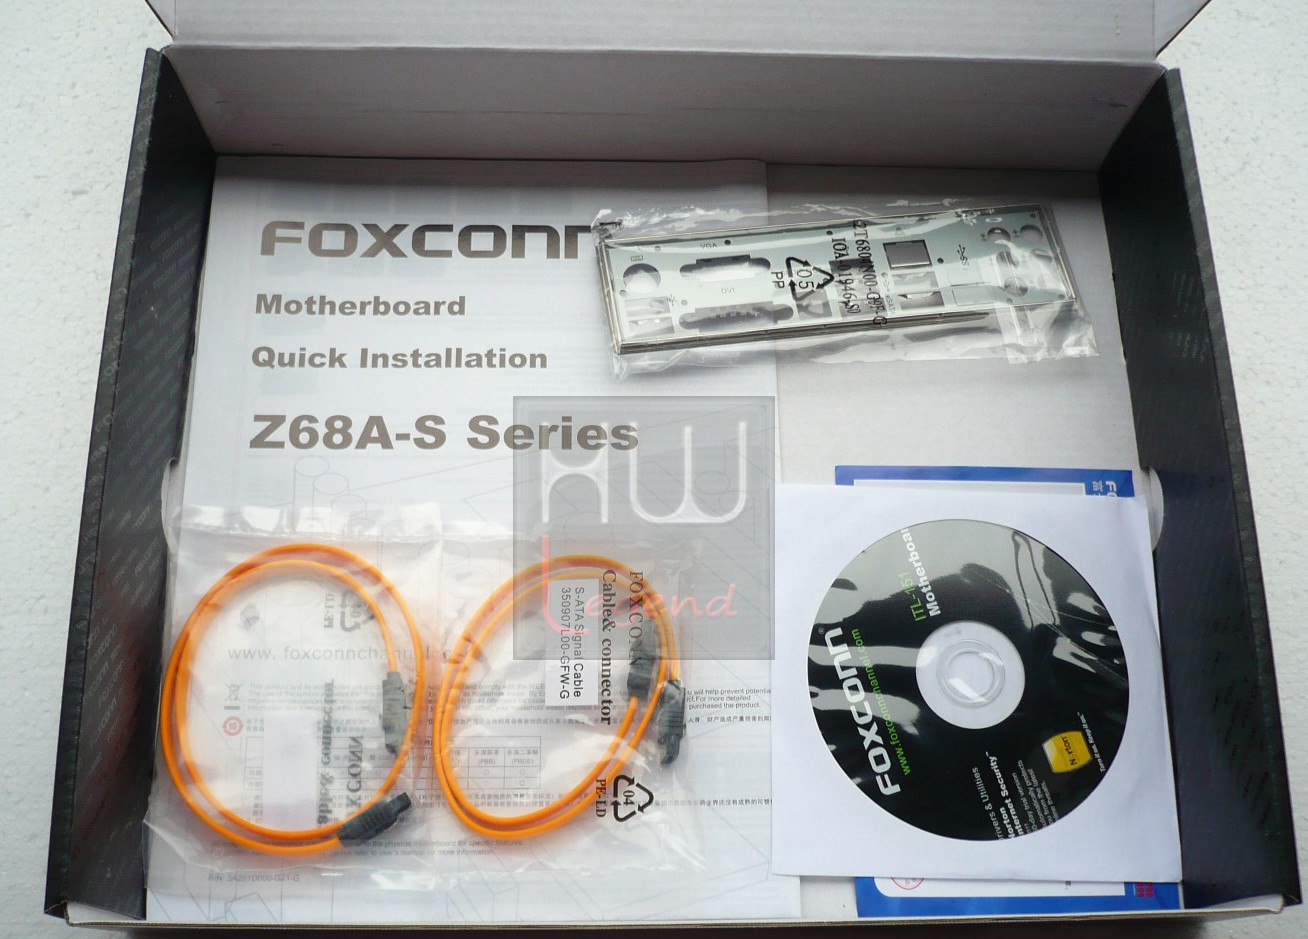 026-foxconn-z68a-s-foto-confezione-aperta-bundle